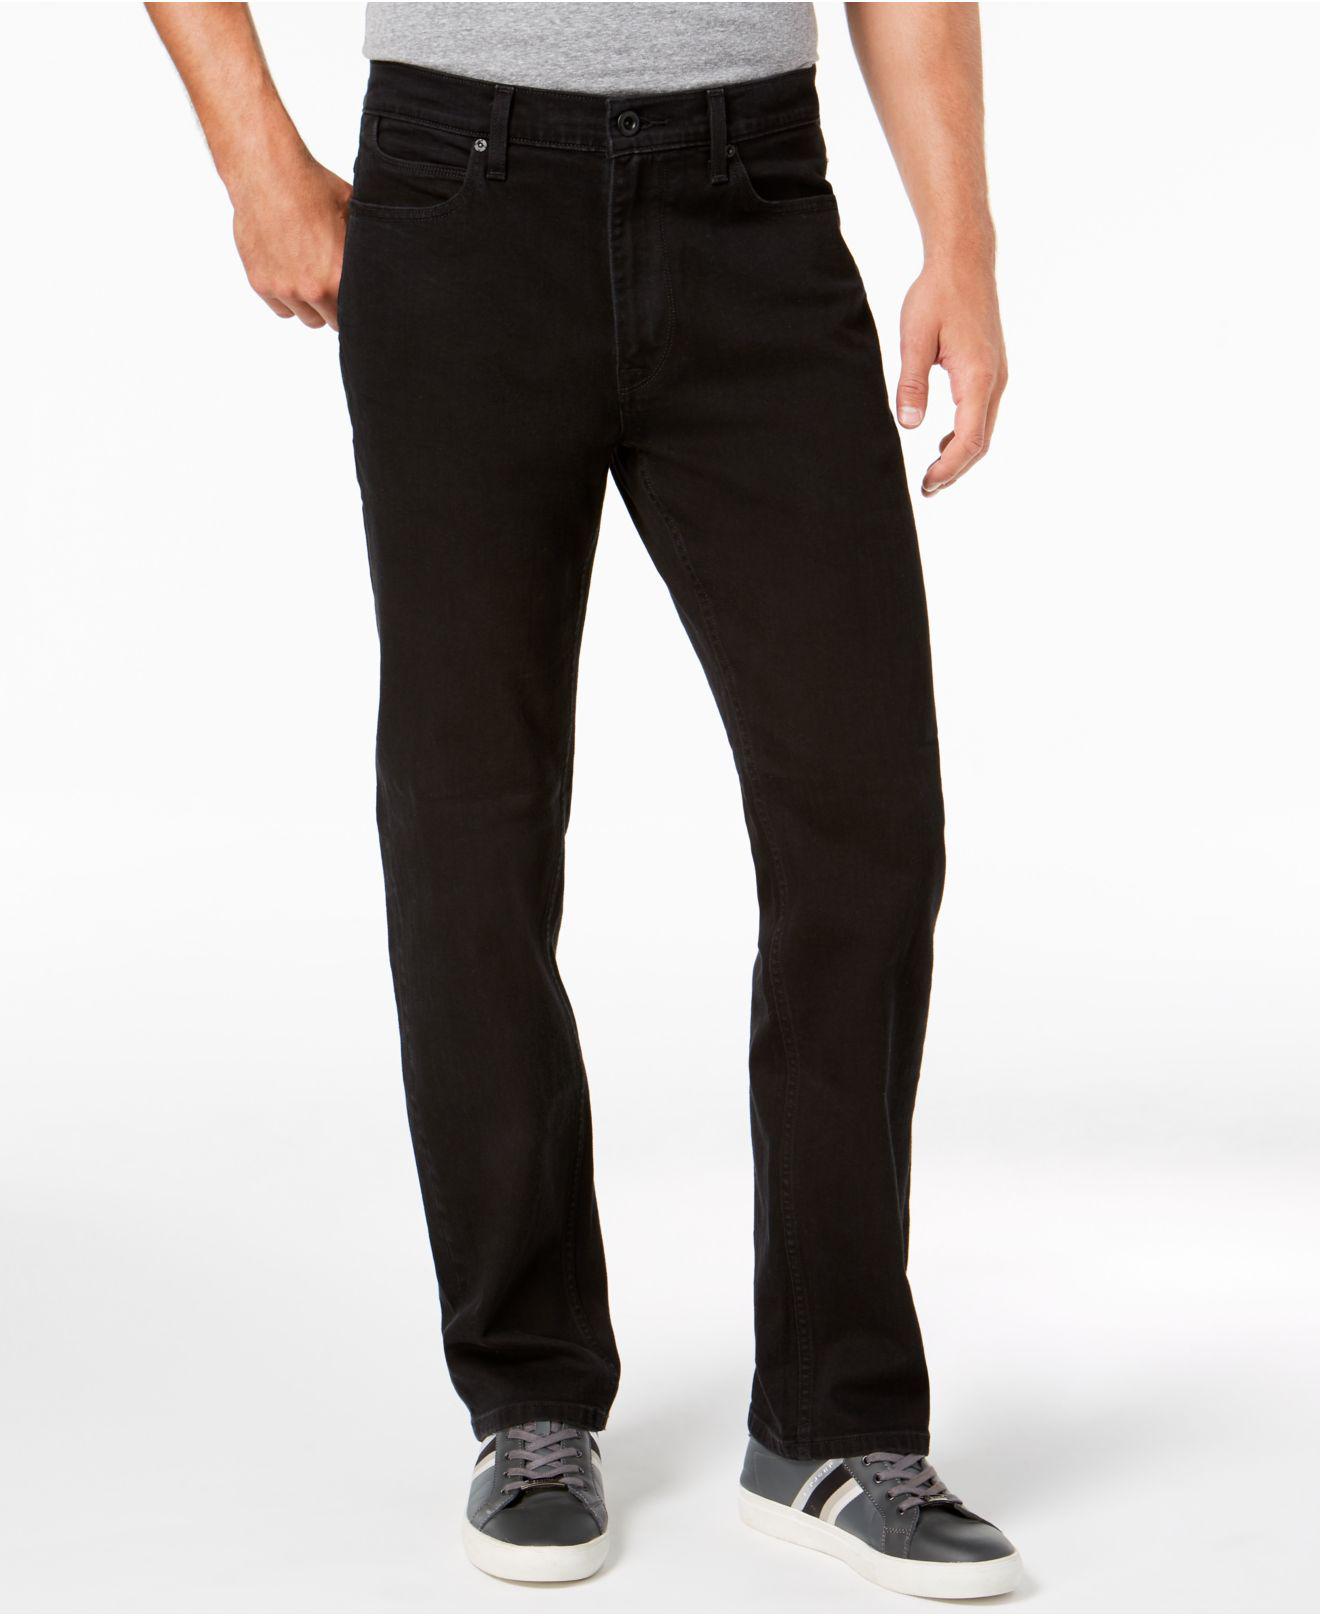 Sean John Denim Hamilton Relaxed Fit Jeans in Onyx (Black) for Men ...